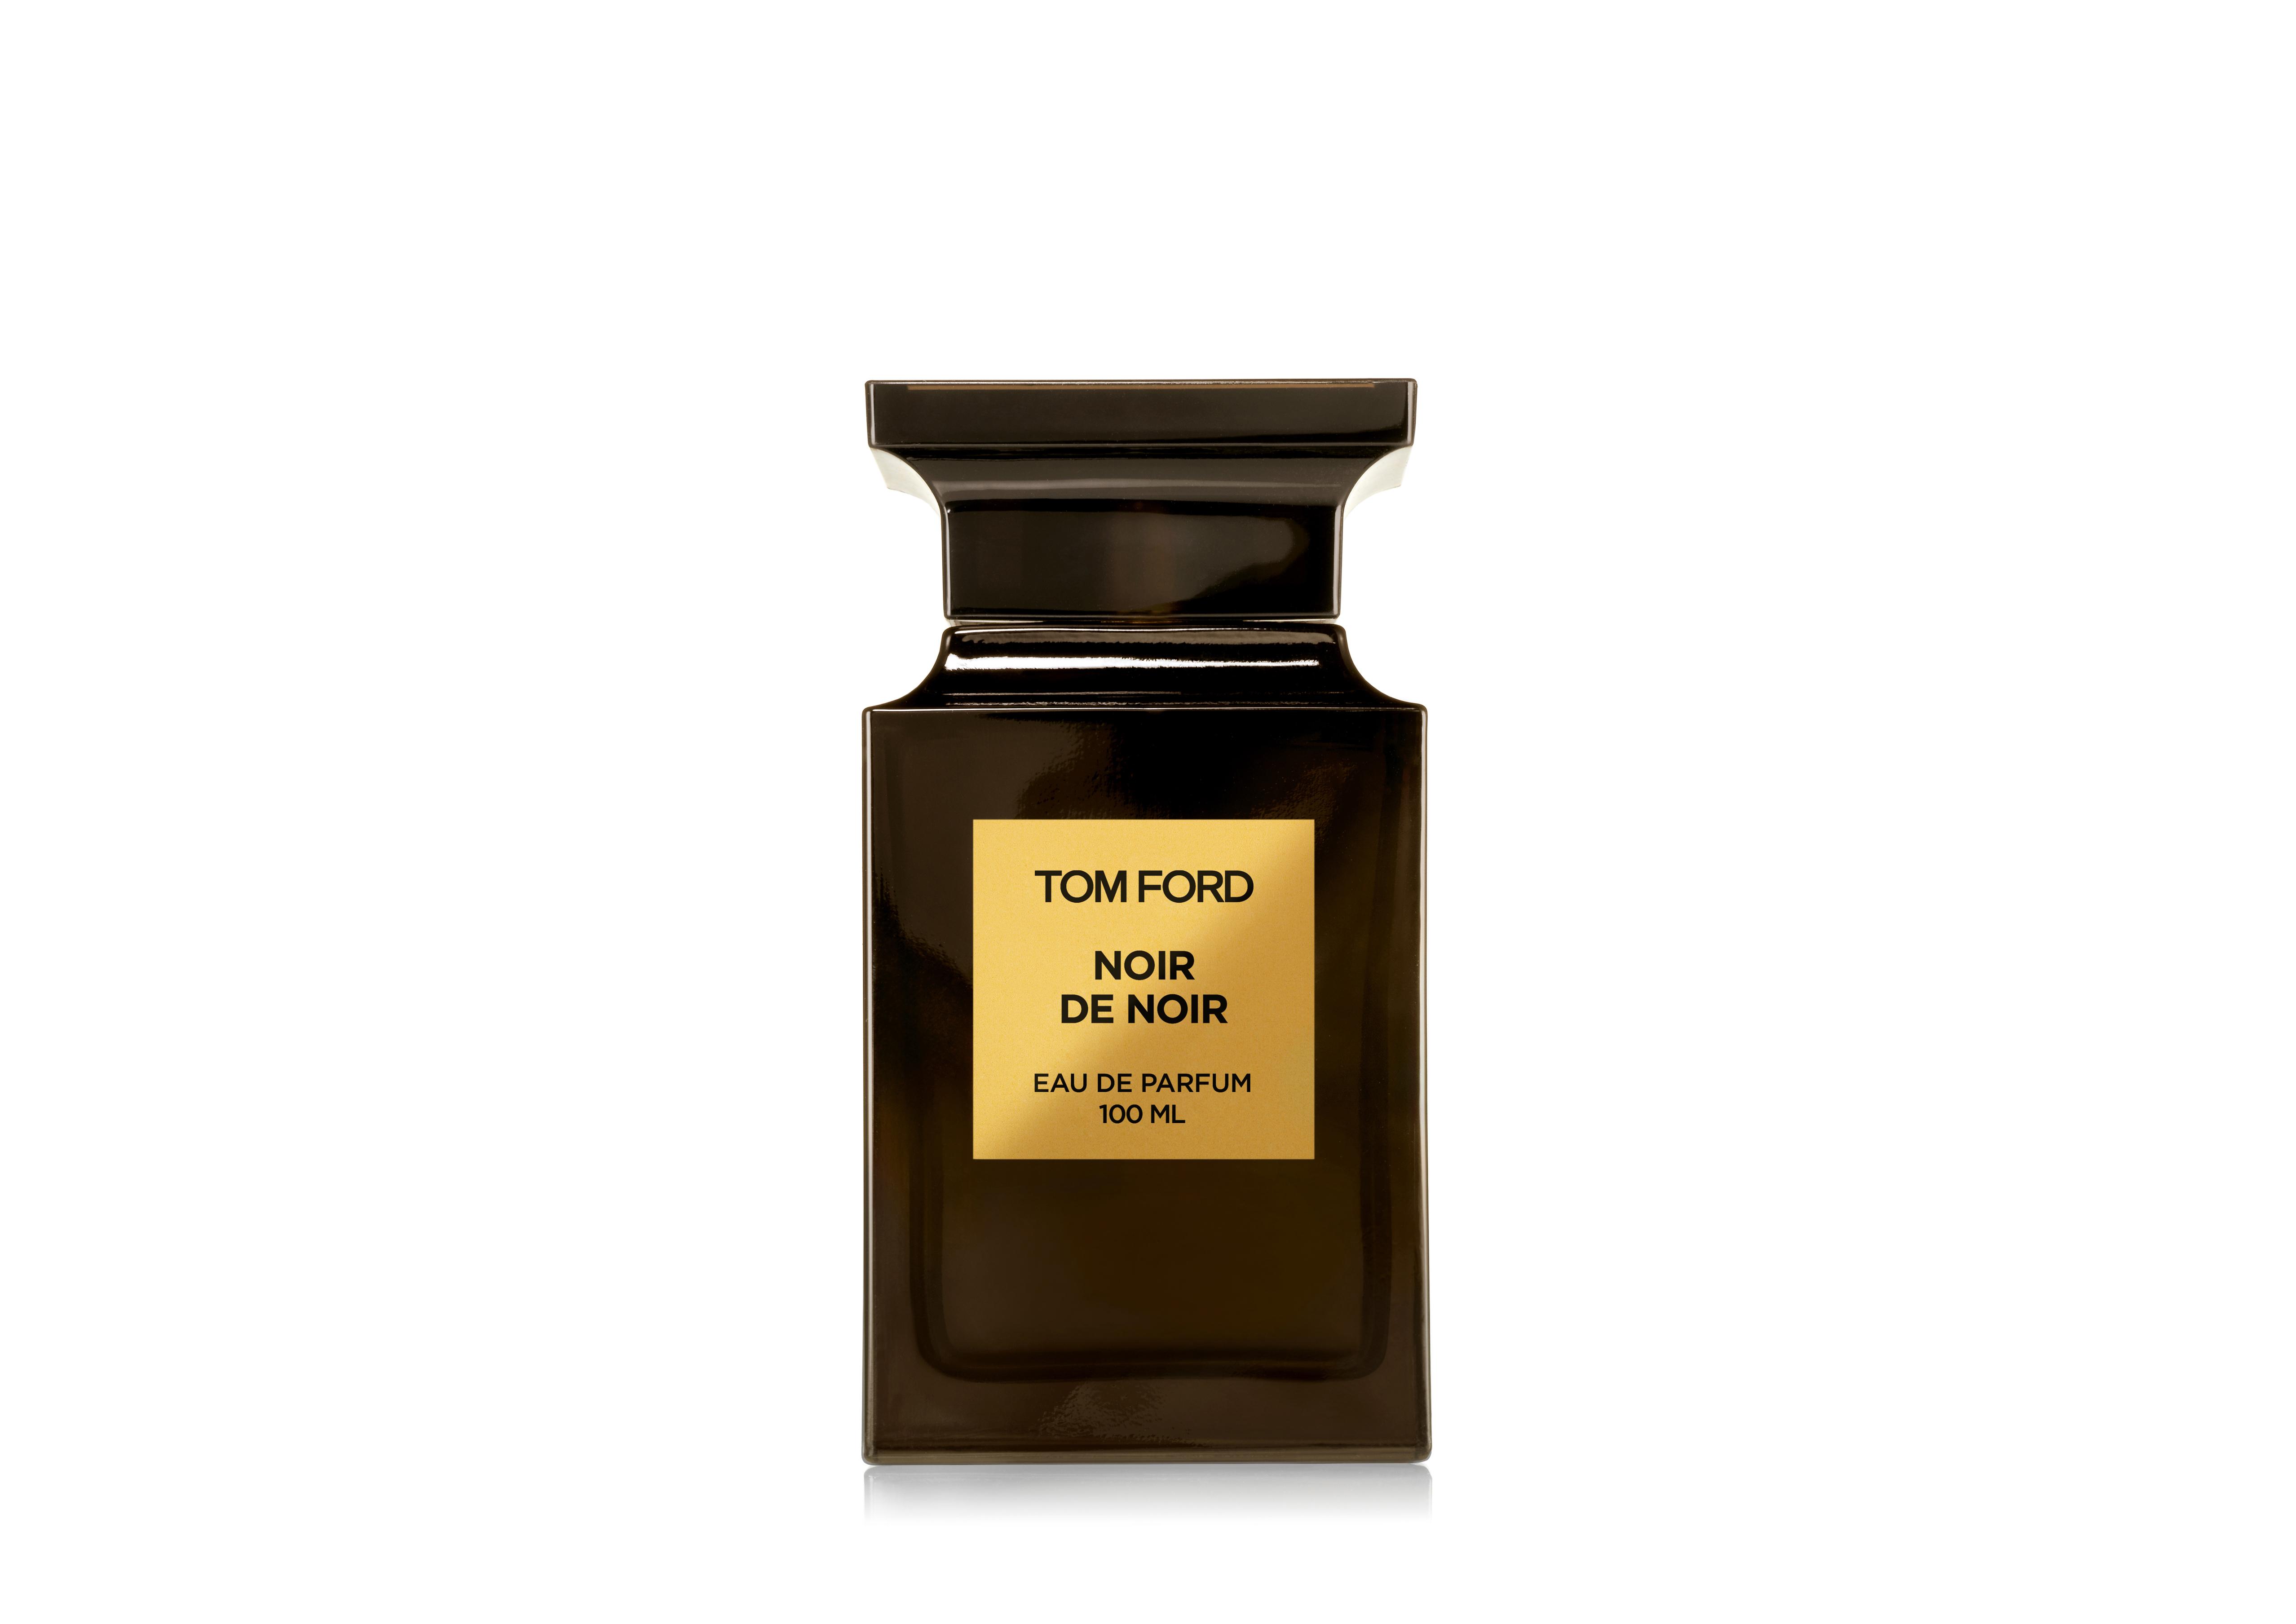 tom ford noir noir perfume